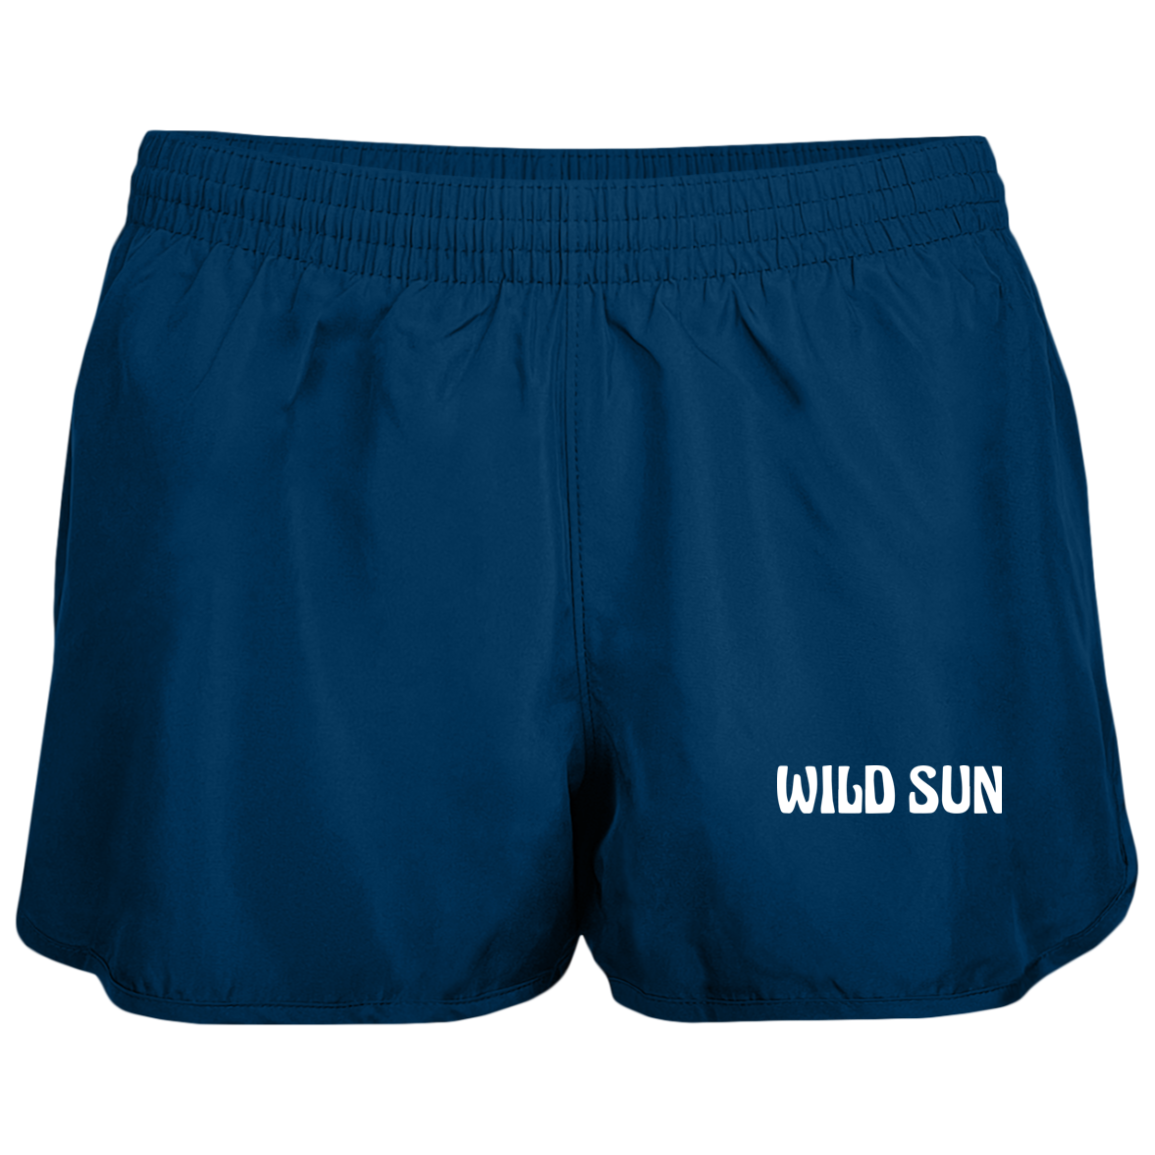 Wild Sun Ladies' Running Shorts